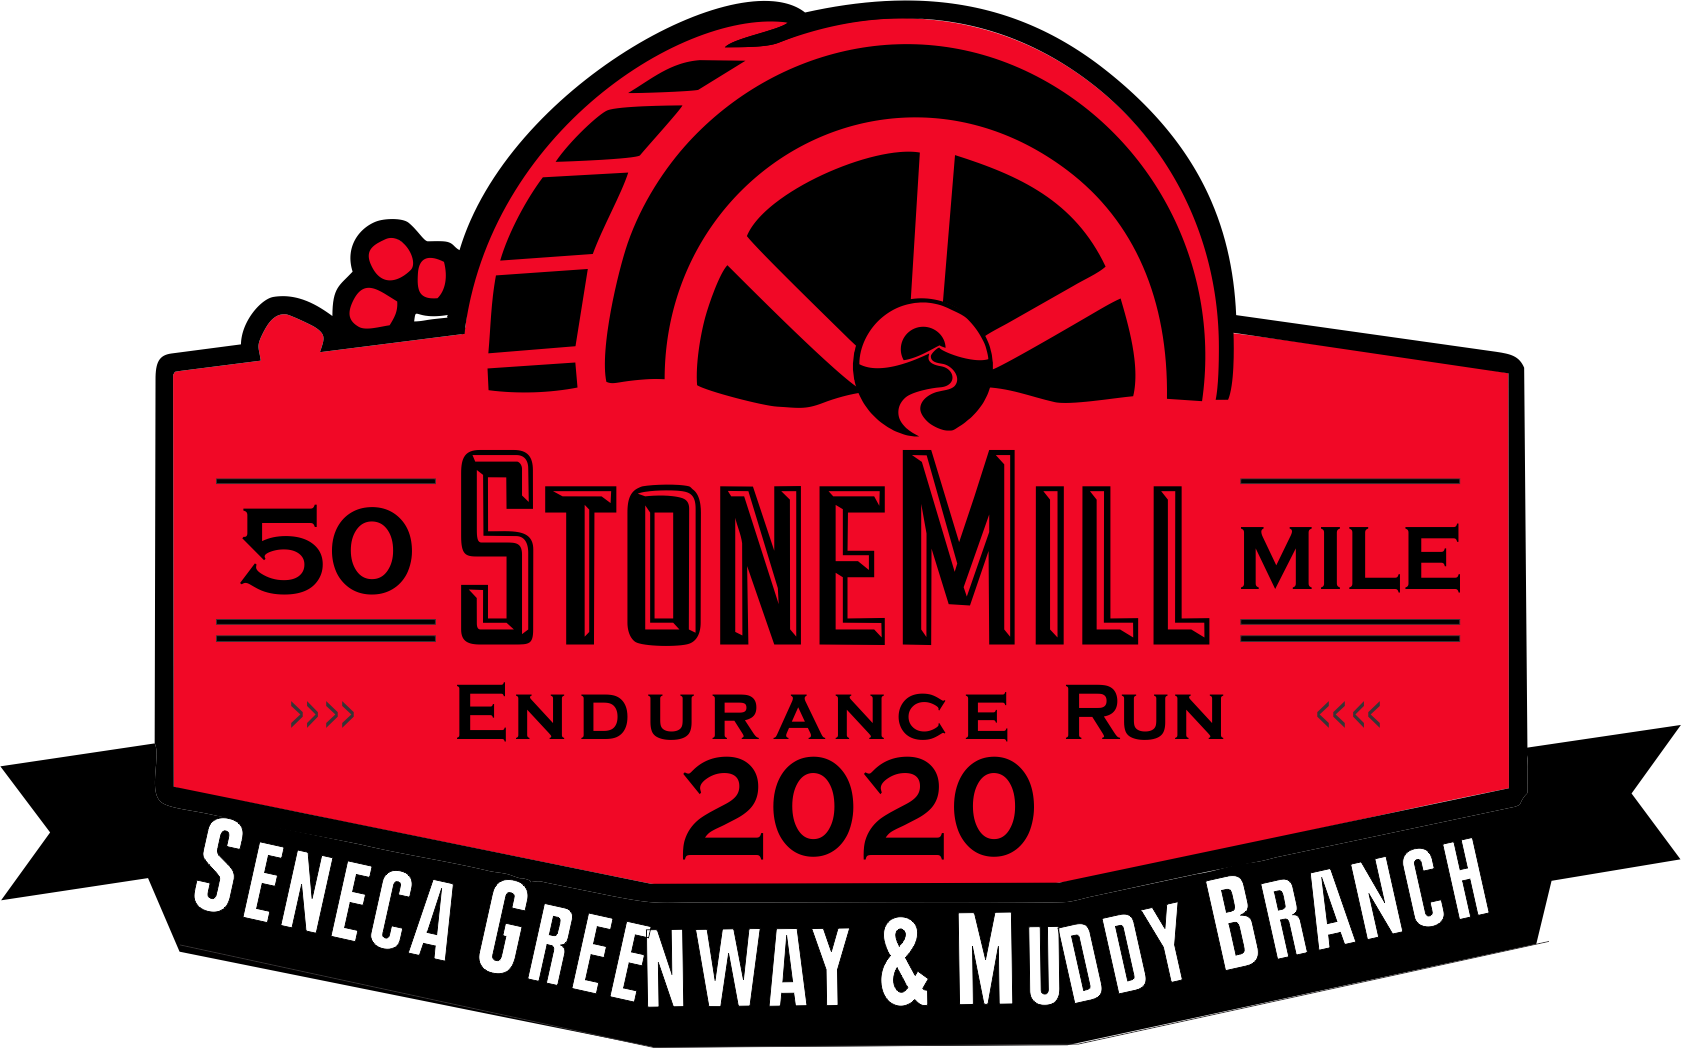 Stone Mill 50 Mile Run logo on RaceRaves